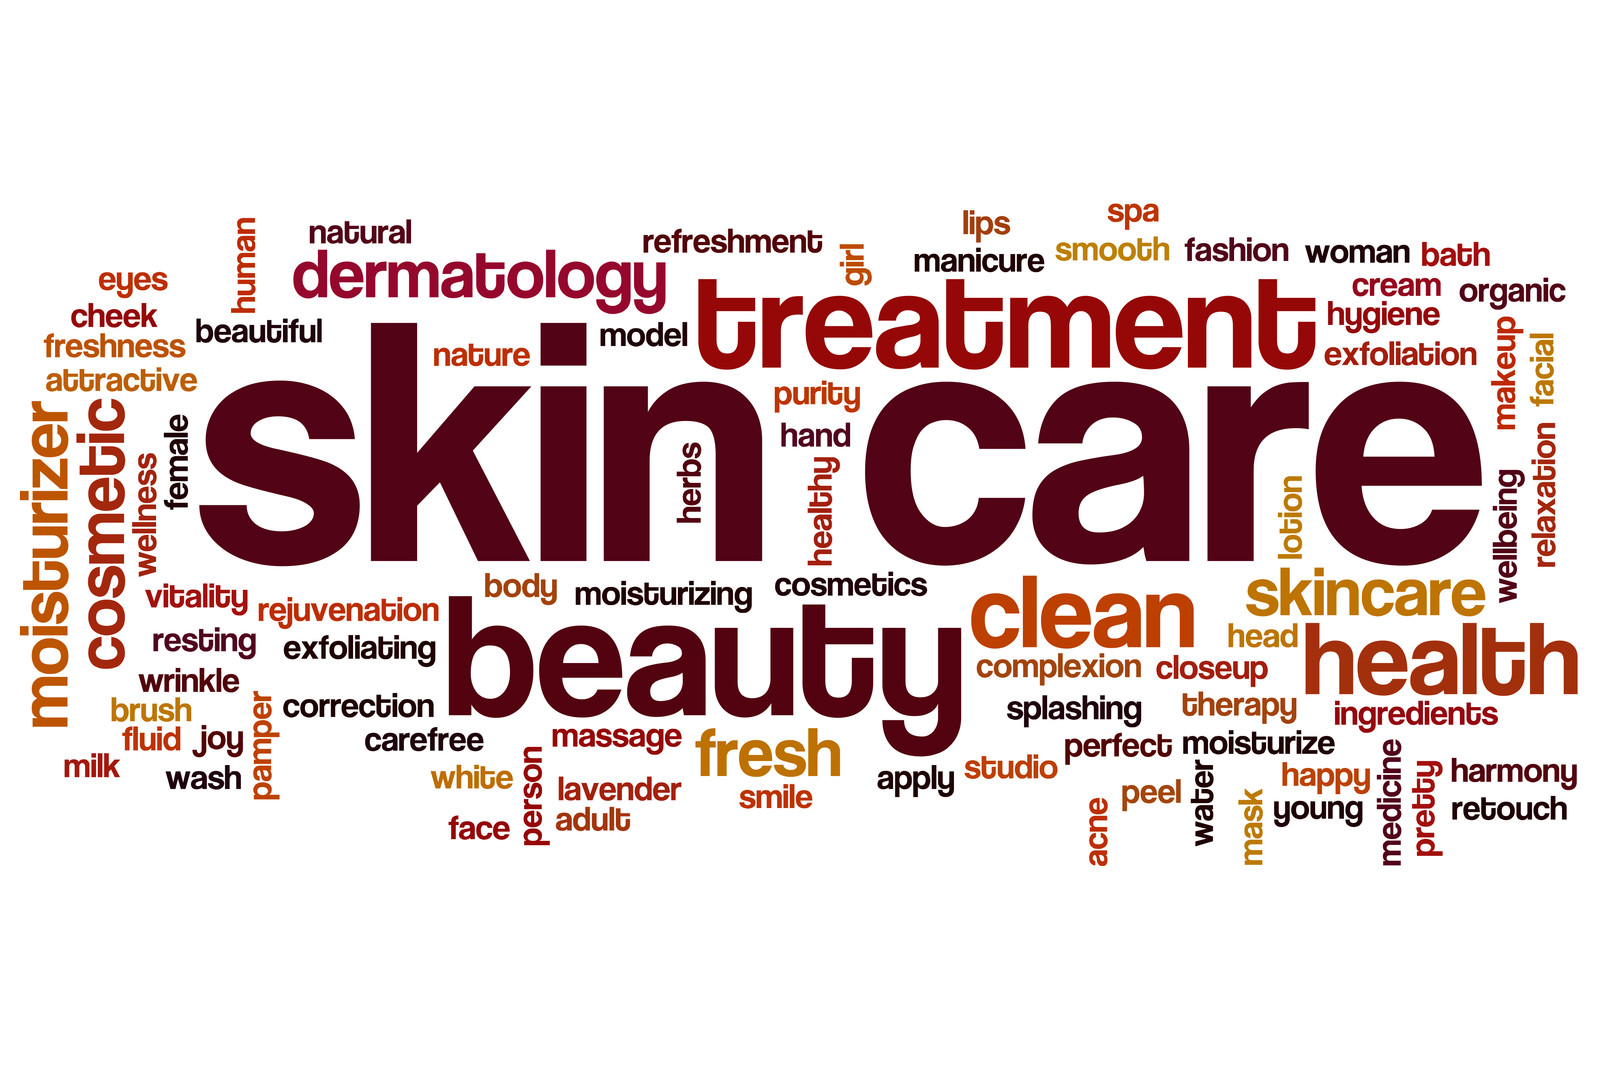 Skincare image